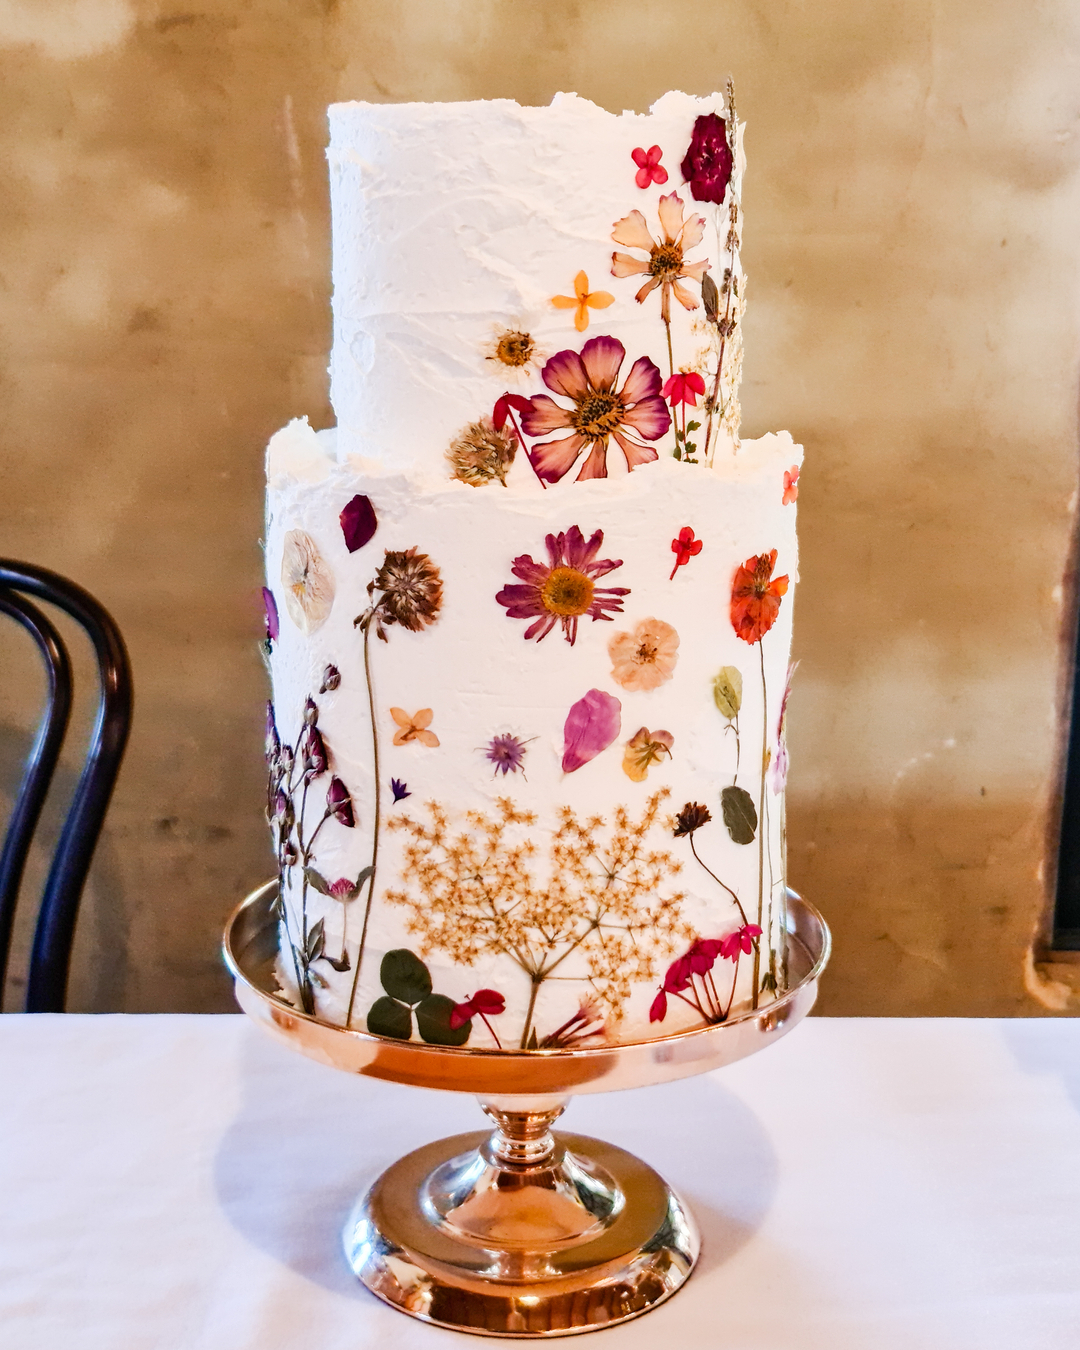 Popular wedding cake trends dried florals